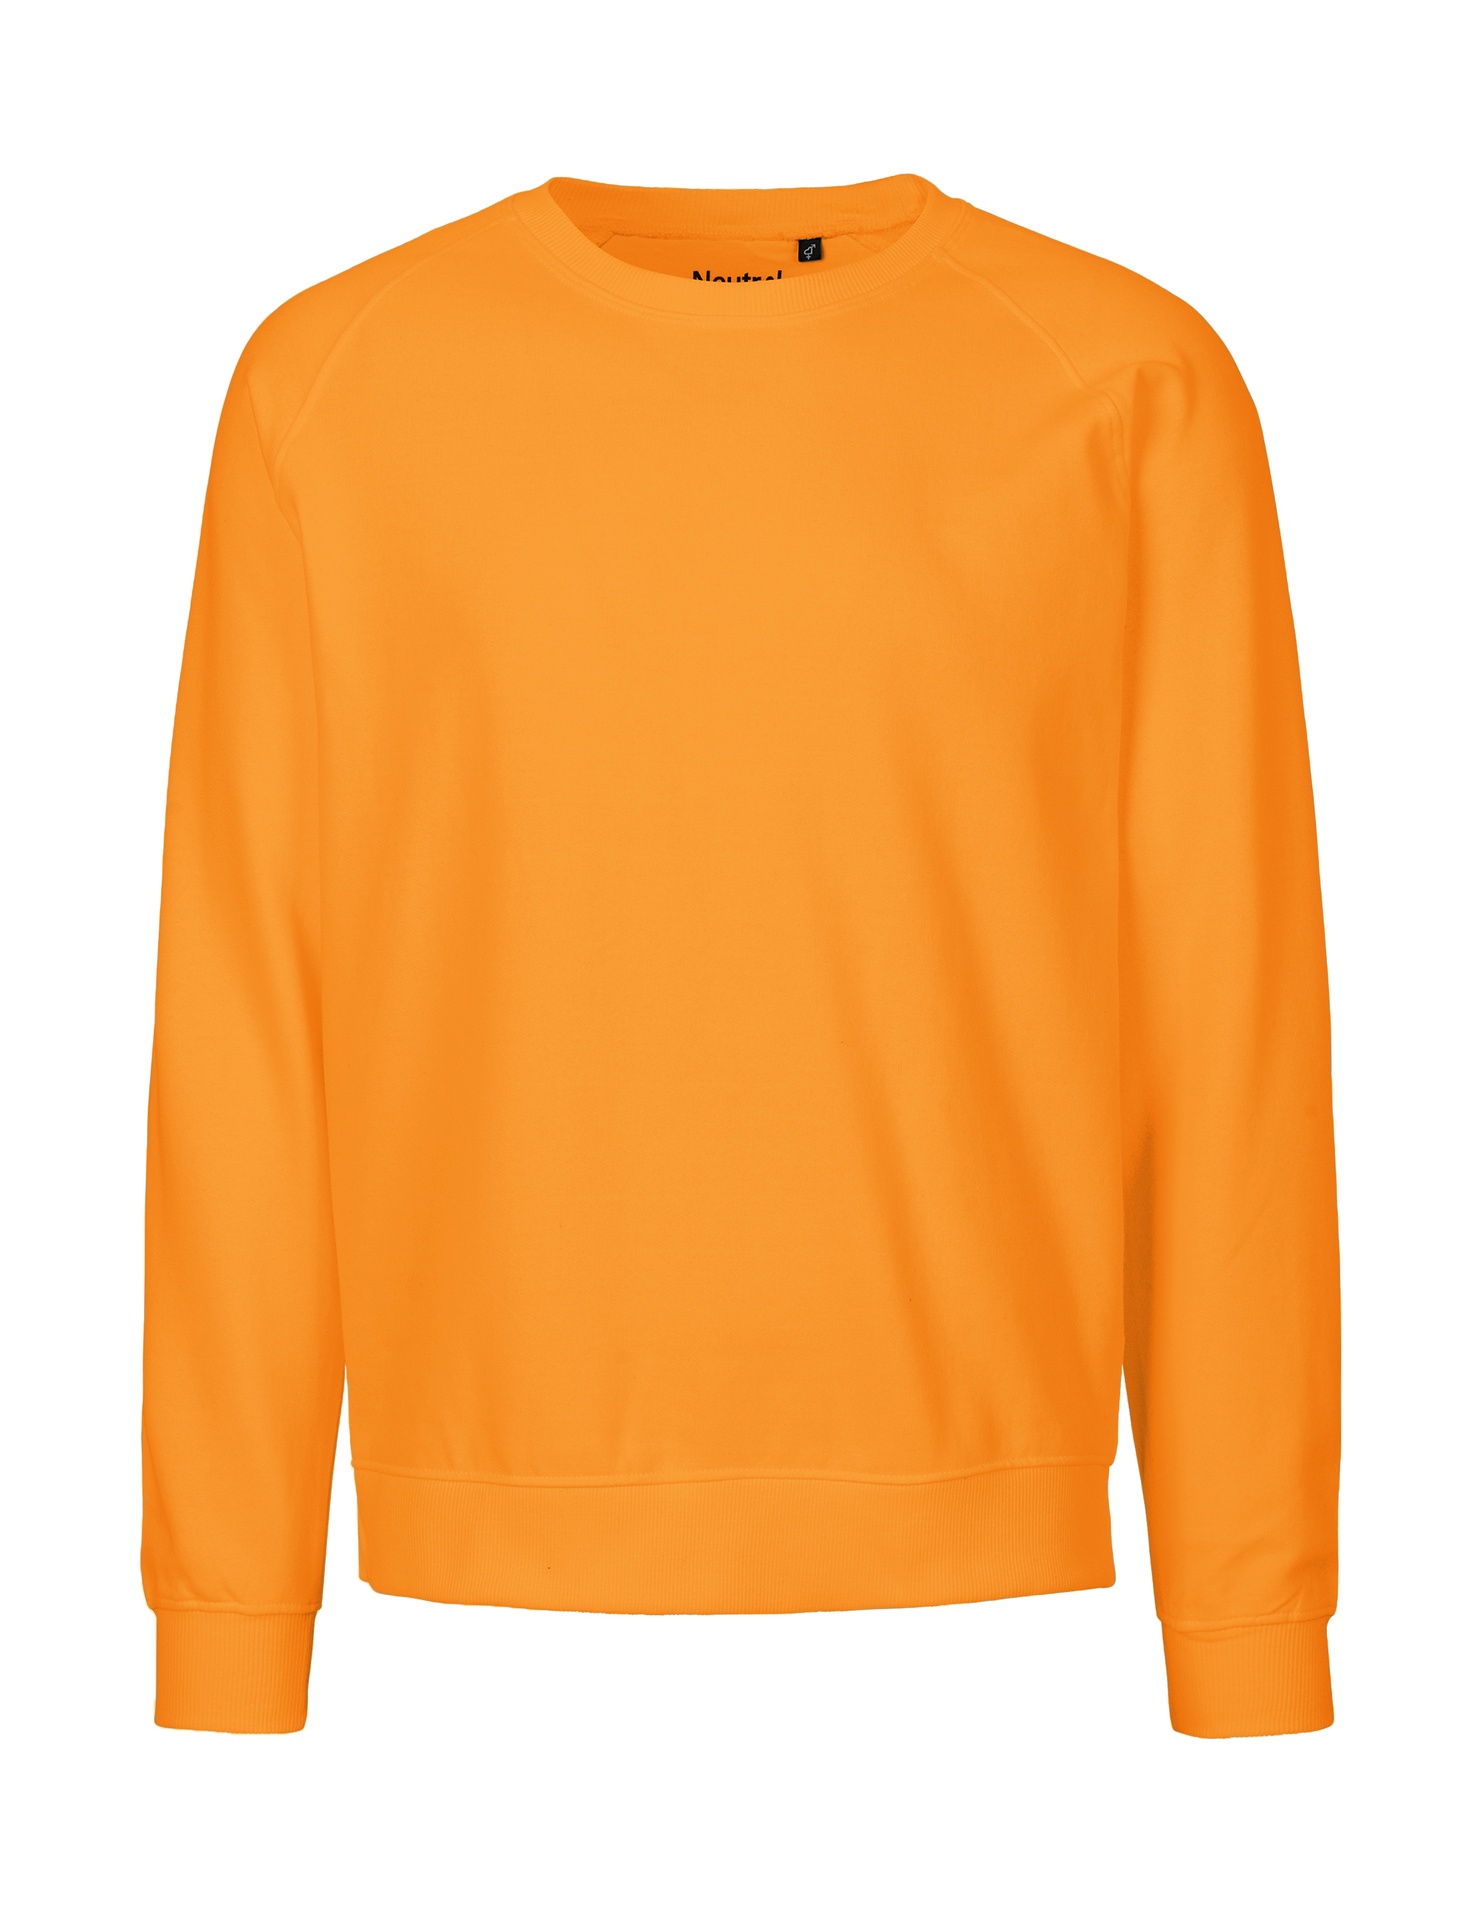 [PR/02795] Unisex Sweatshirt (Okay Orange 31, 5XL)